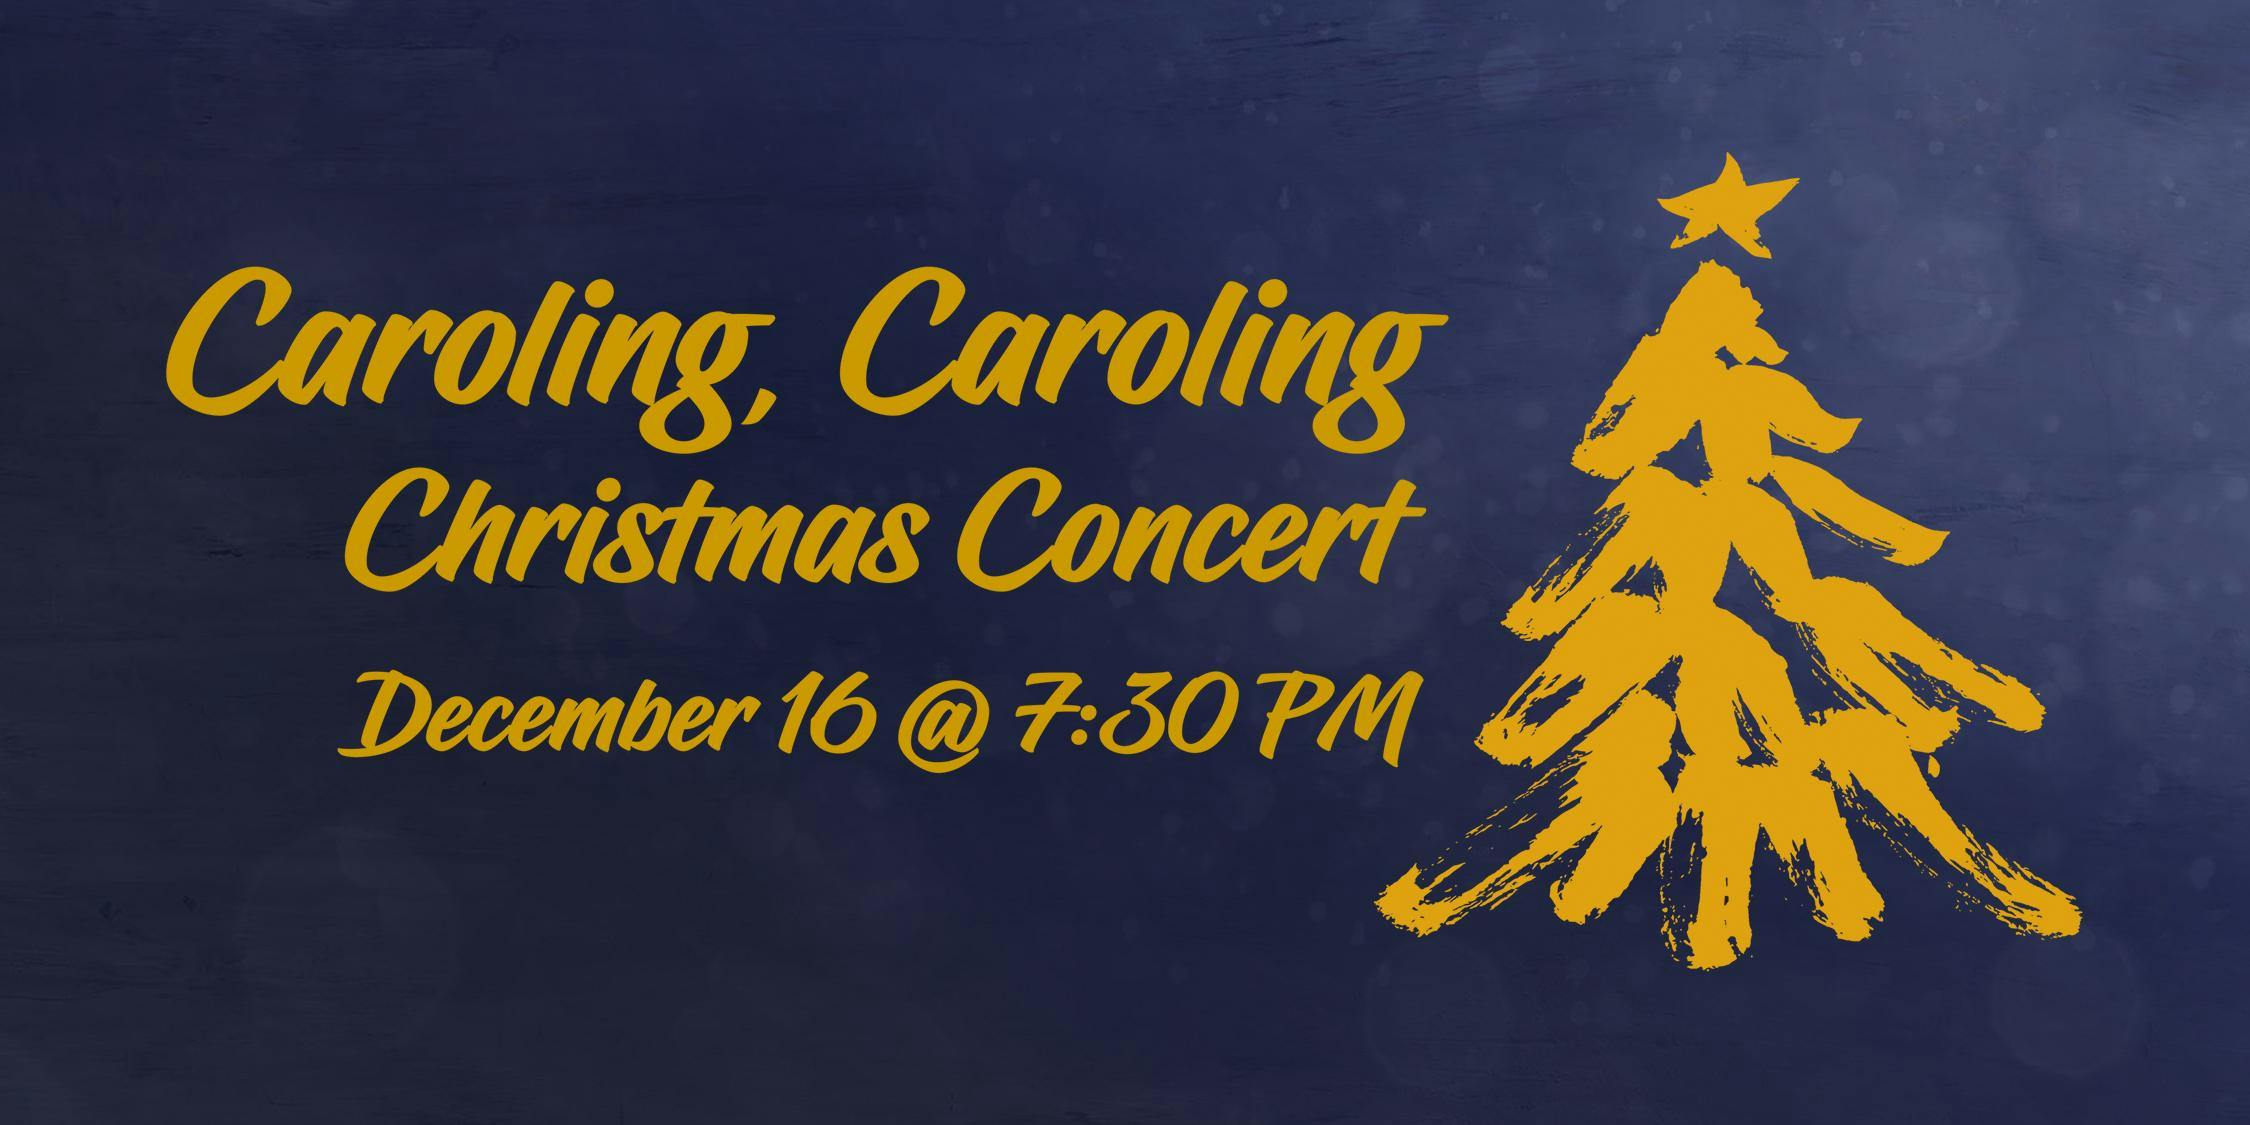 Caroling, Caroling Christmas Concert